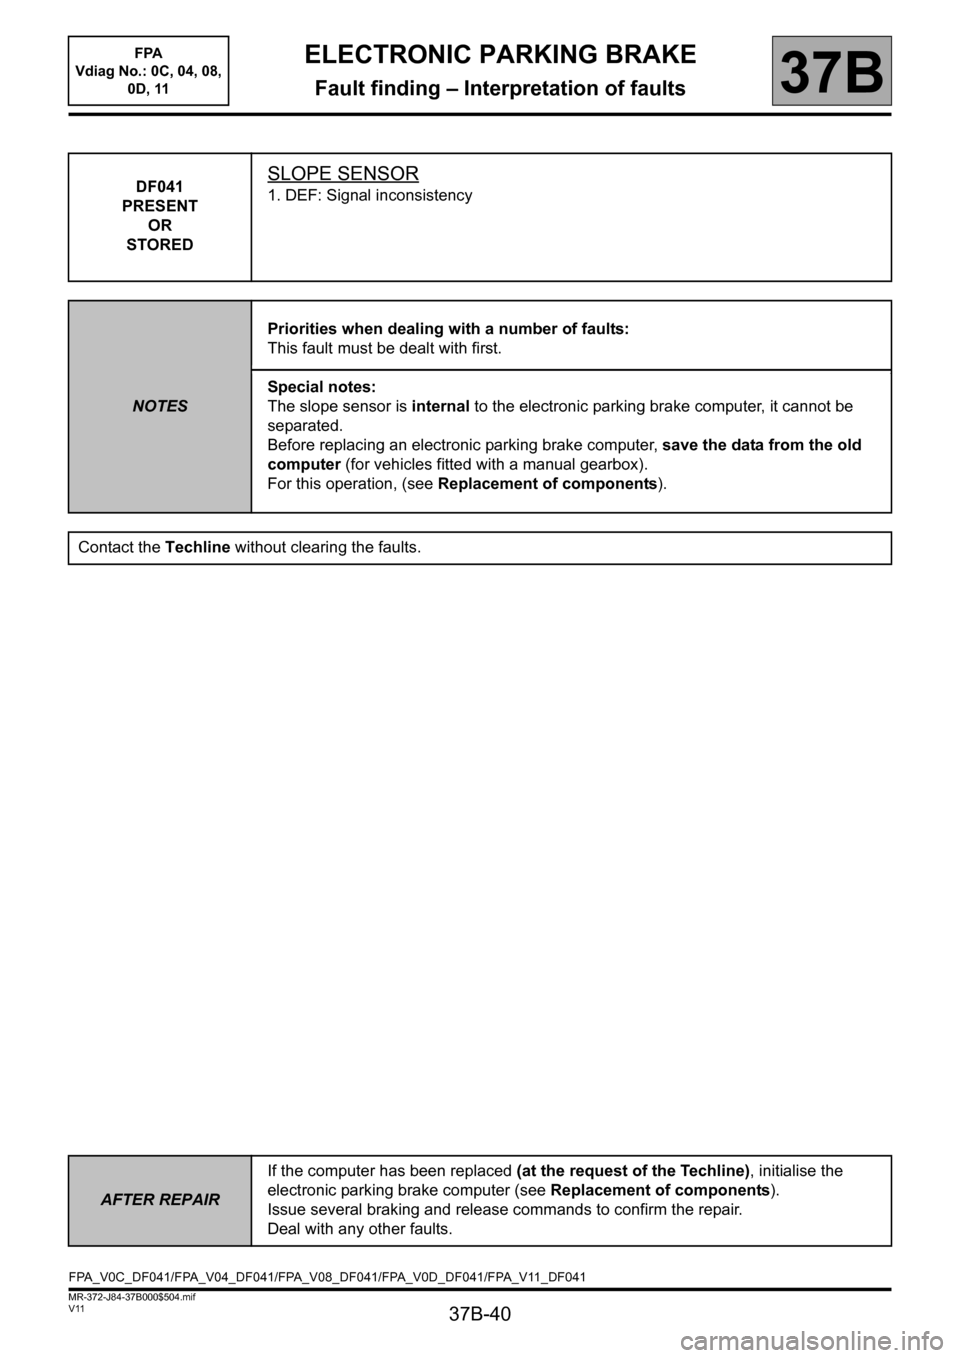 RENAULT SCENIC 2013 J95 / 3.G Electronic Parking Brake Workshop Manual 37B-40
MR-372-J84-37B000$504.mif
V11
ELECTRONIC PARKING BRAKE
Fault finding – Interpretation of faults
FPA  
Vdiag No.: 0C, 04, 08, 
0D, 11
37B
DF041
PRESENT
OR
STOREDSLOPE SENSOR
1. DEF: Signal inc